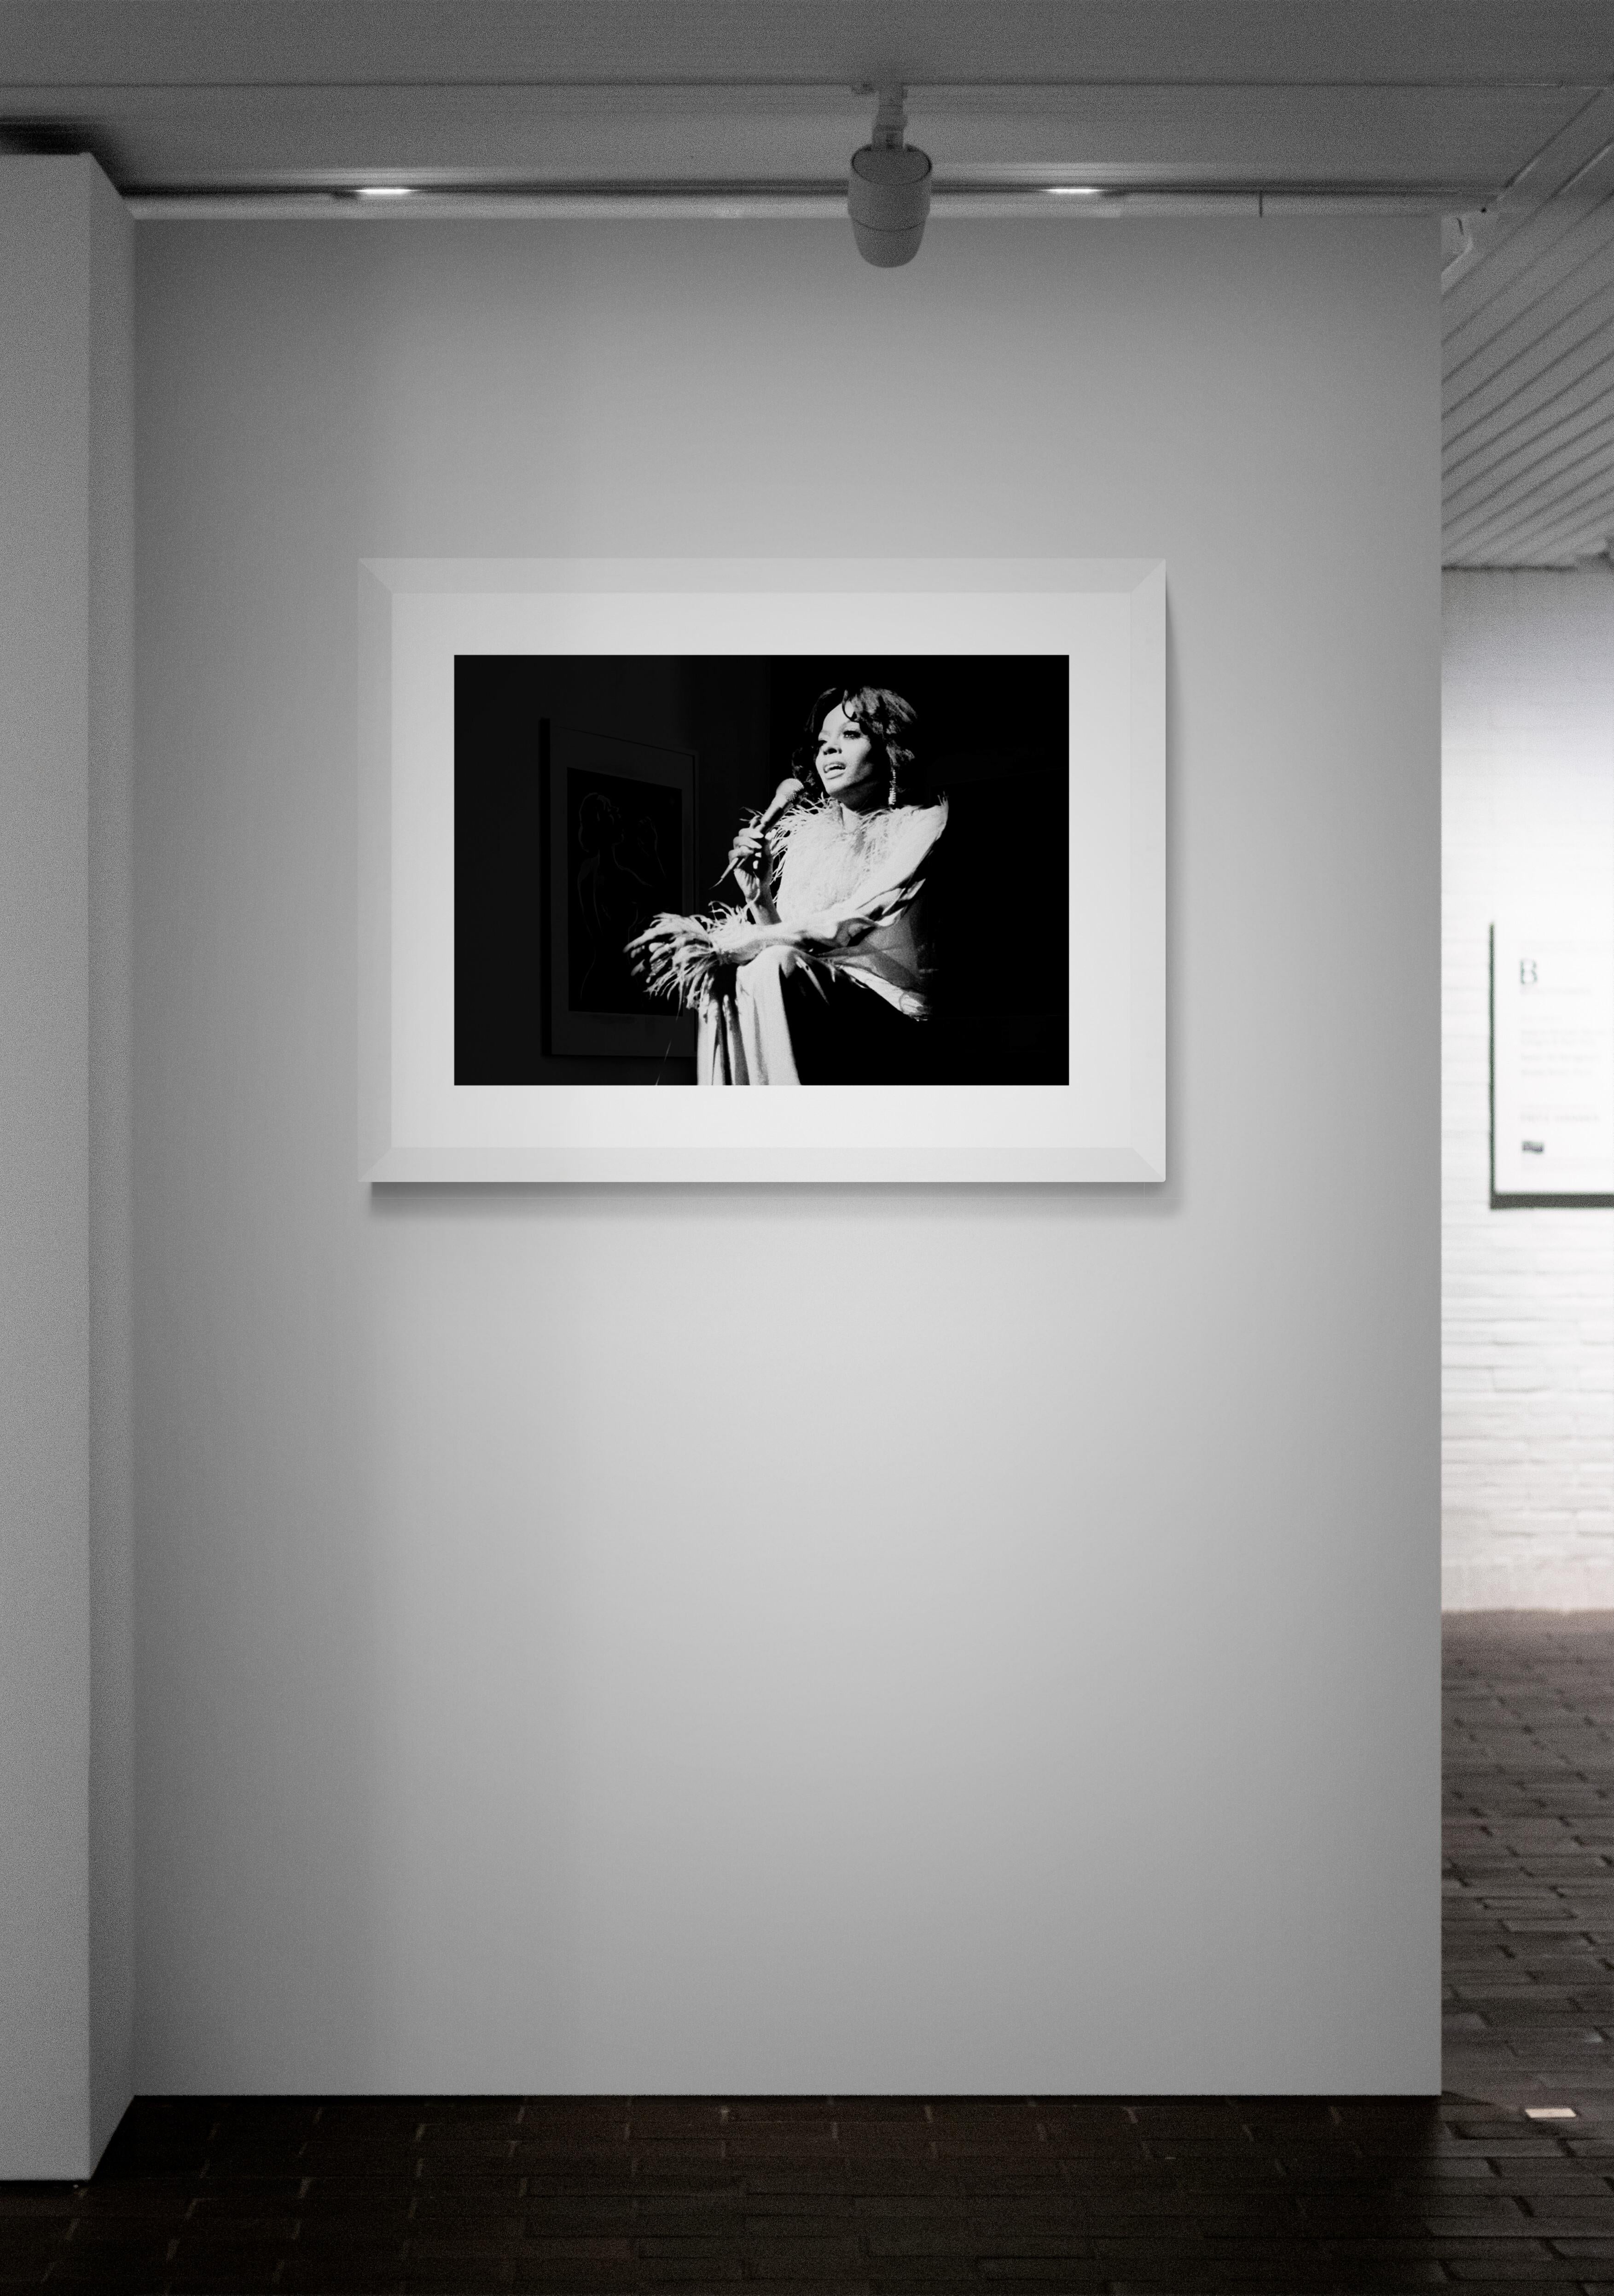 Diana Ross Nr. 1 Foto (Schwarz), Black and White Photograph, von Richard E. Aaron